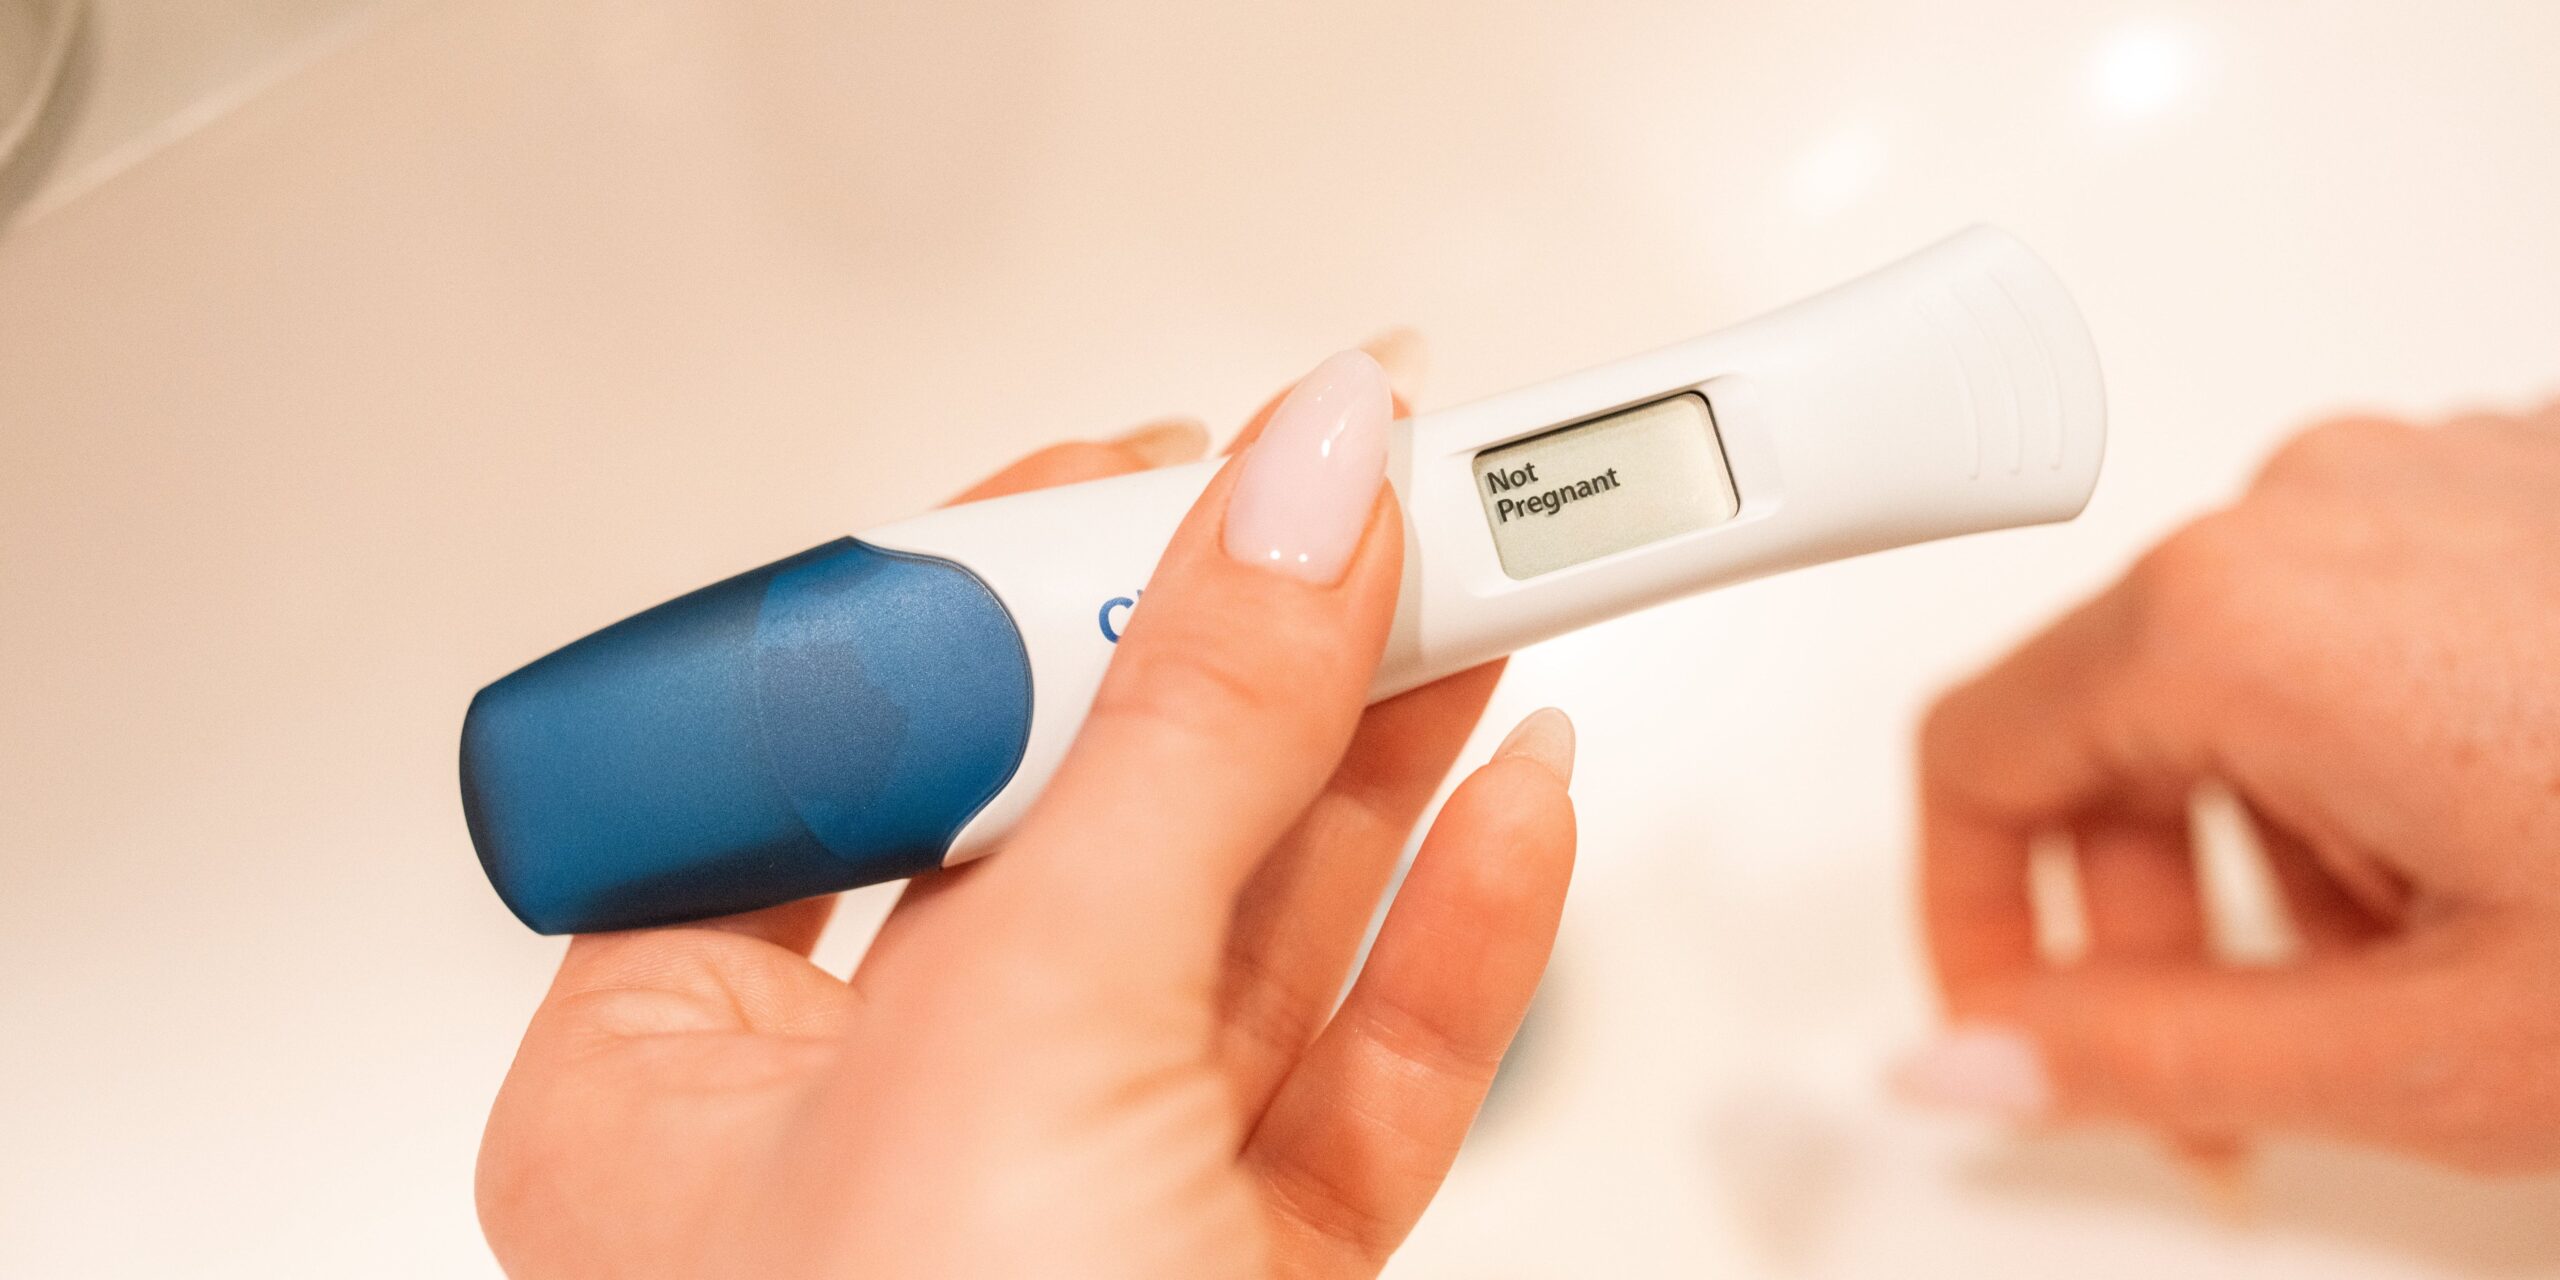 When should I take a pregnancy test